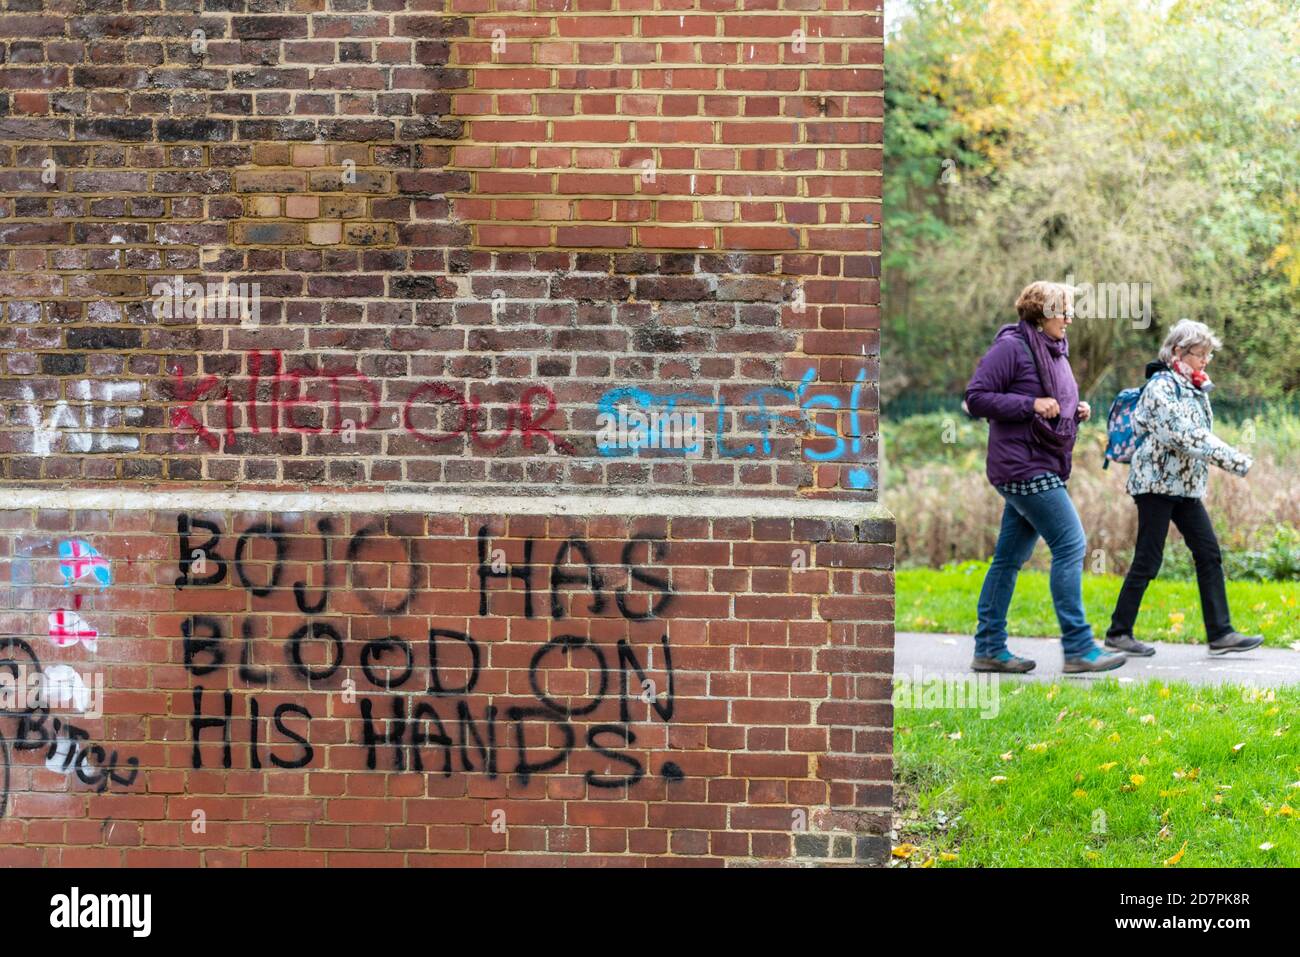 Boris Johnson has blood on his hands graffiti on brick viaduct in Central Park, Chelmsford, Essex, UK, during COVID 19 Coronavirus pandemic Stock Photo